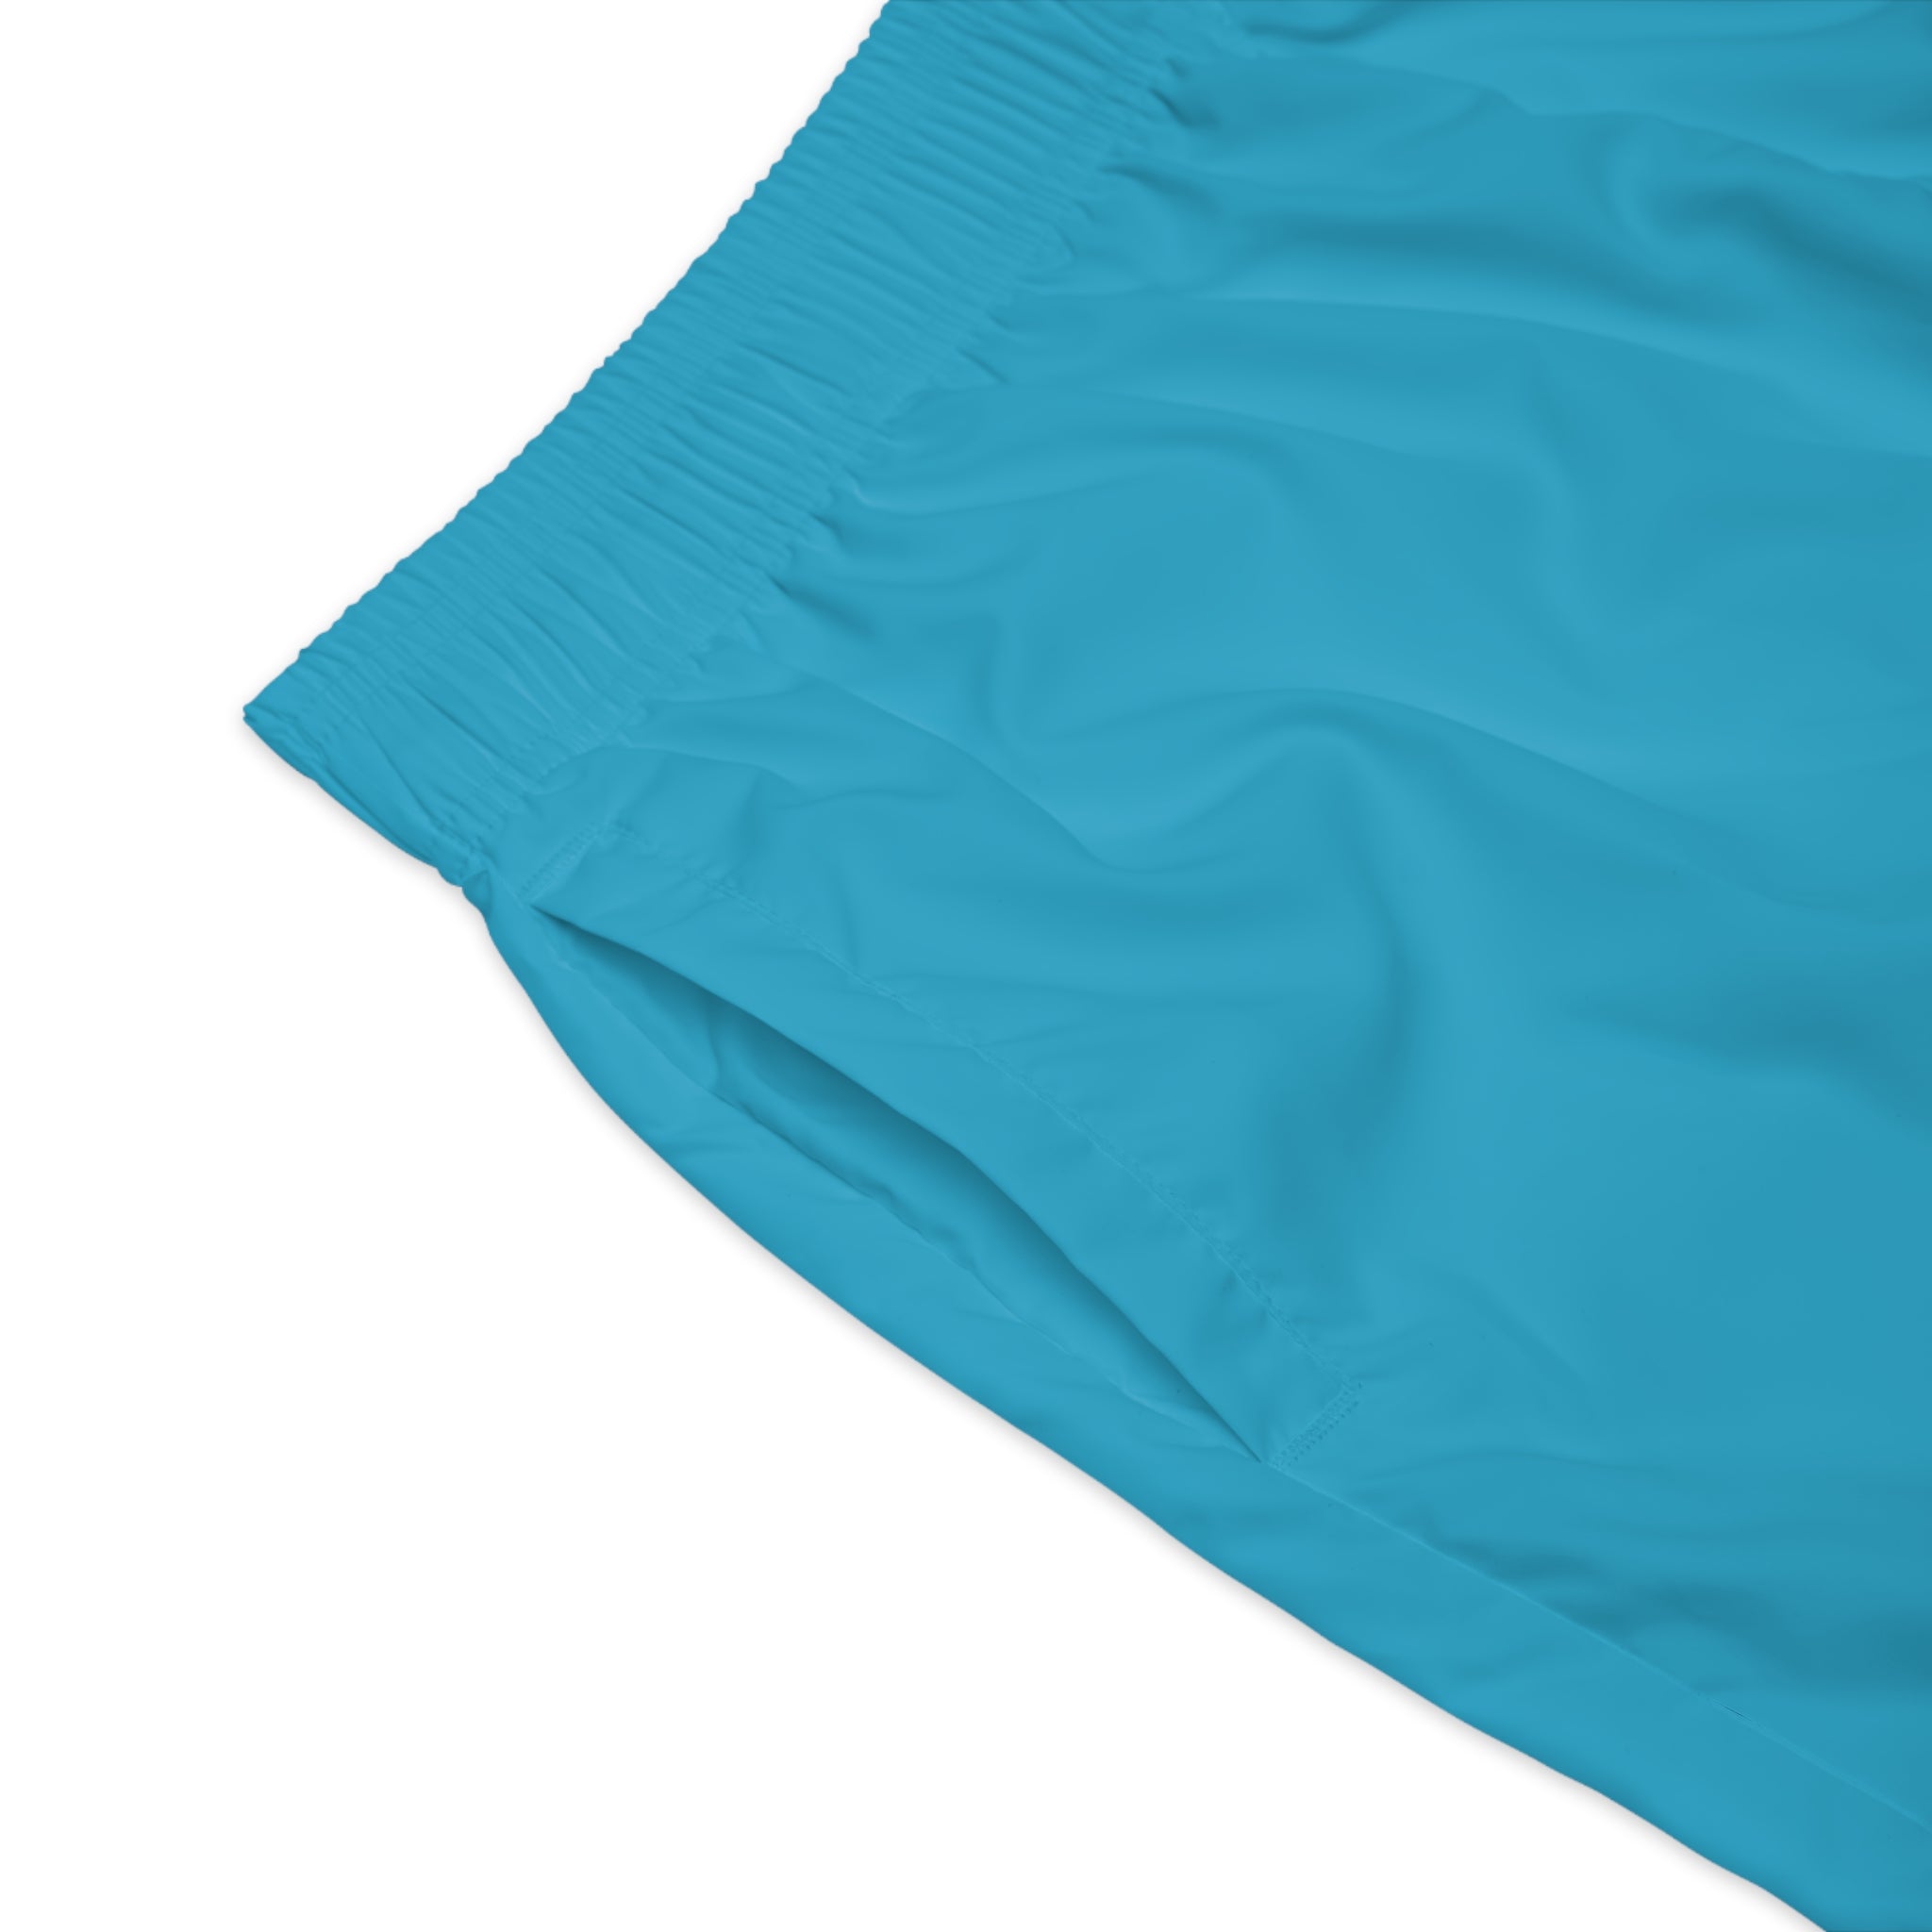 CombinedMinds Men's Jogger Shorts Turquoise/White Logo